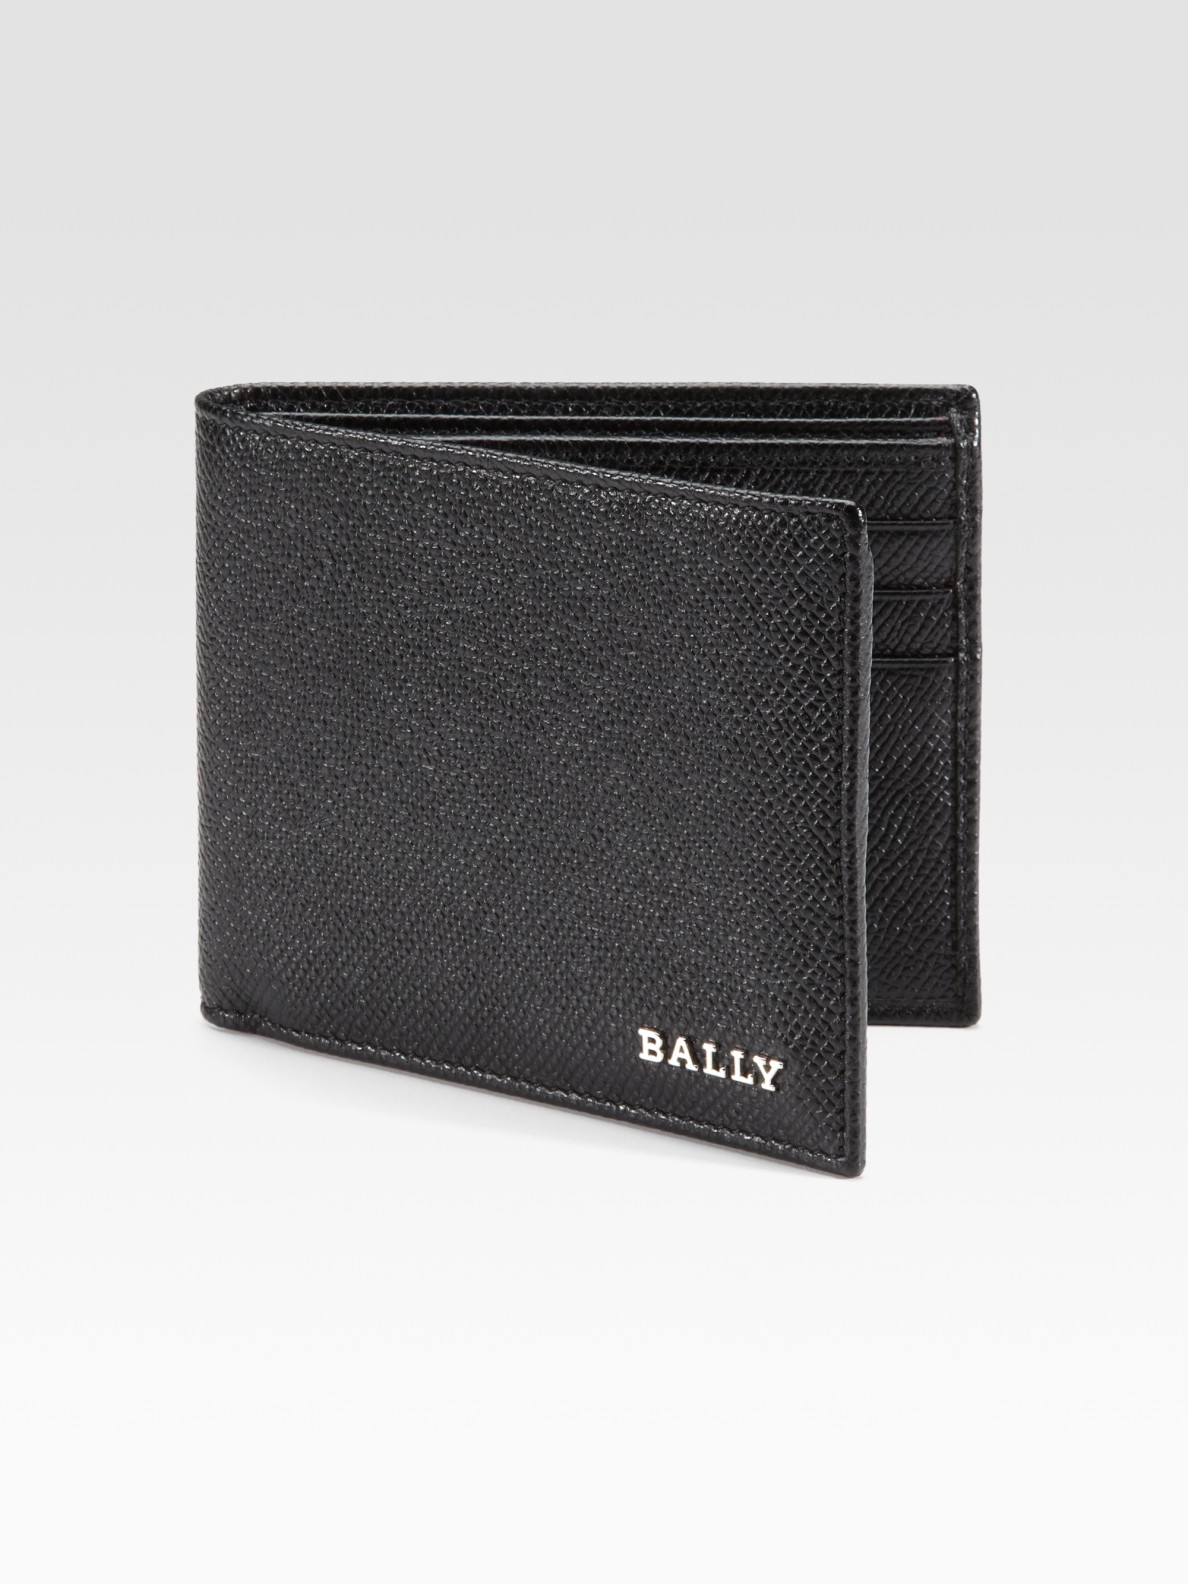 Bally Leather Billfold Wallet in Black for Men | Lyst